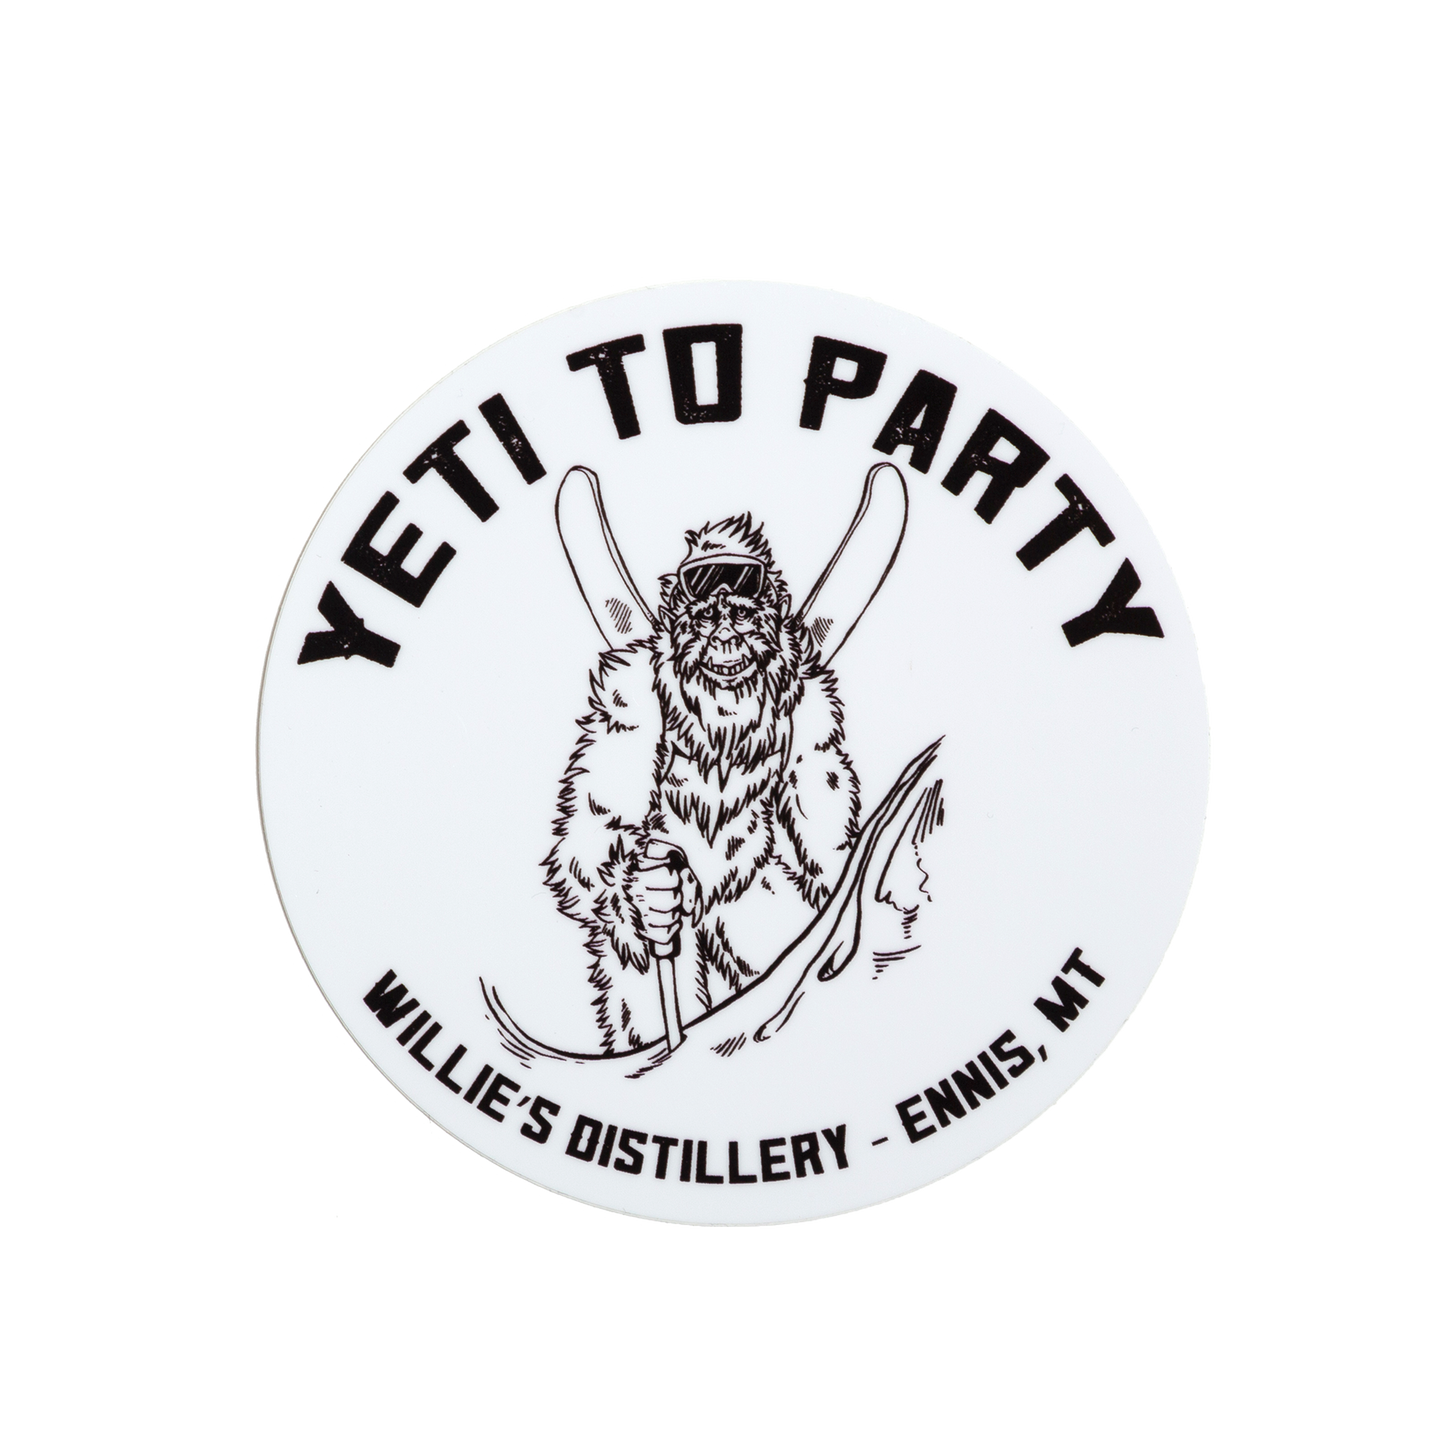 Willie's Distillery Shiny Vinyl Stickers